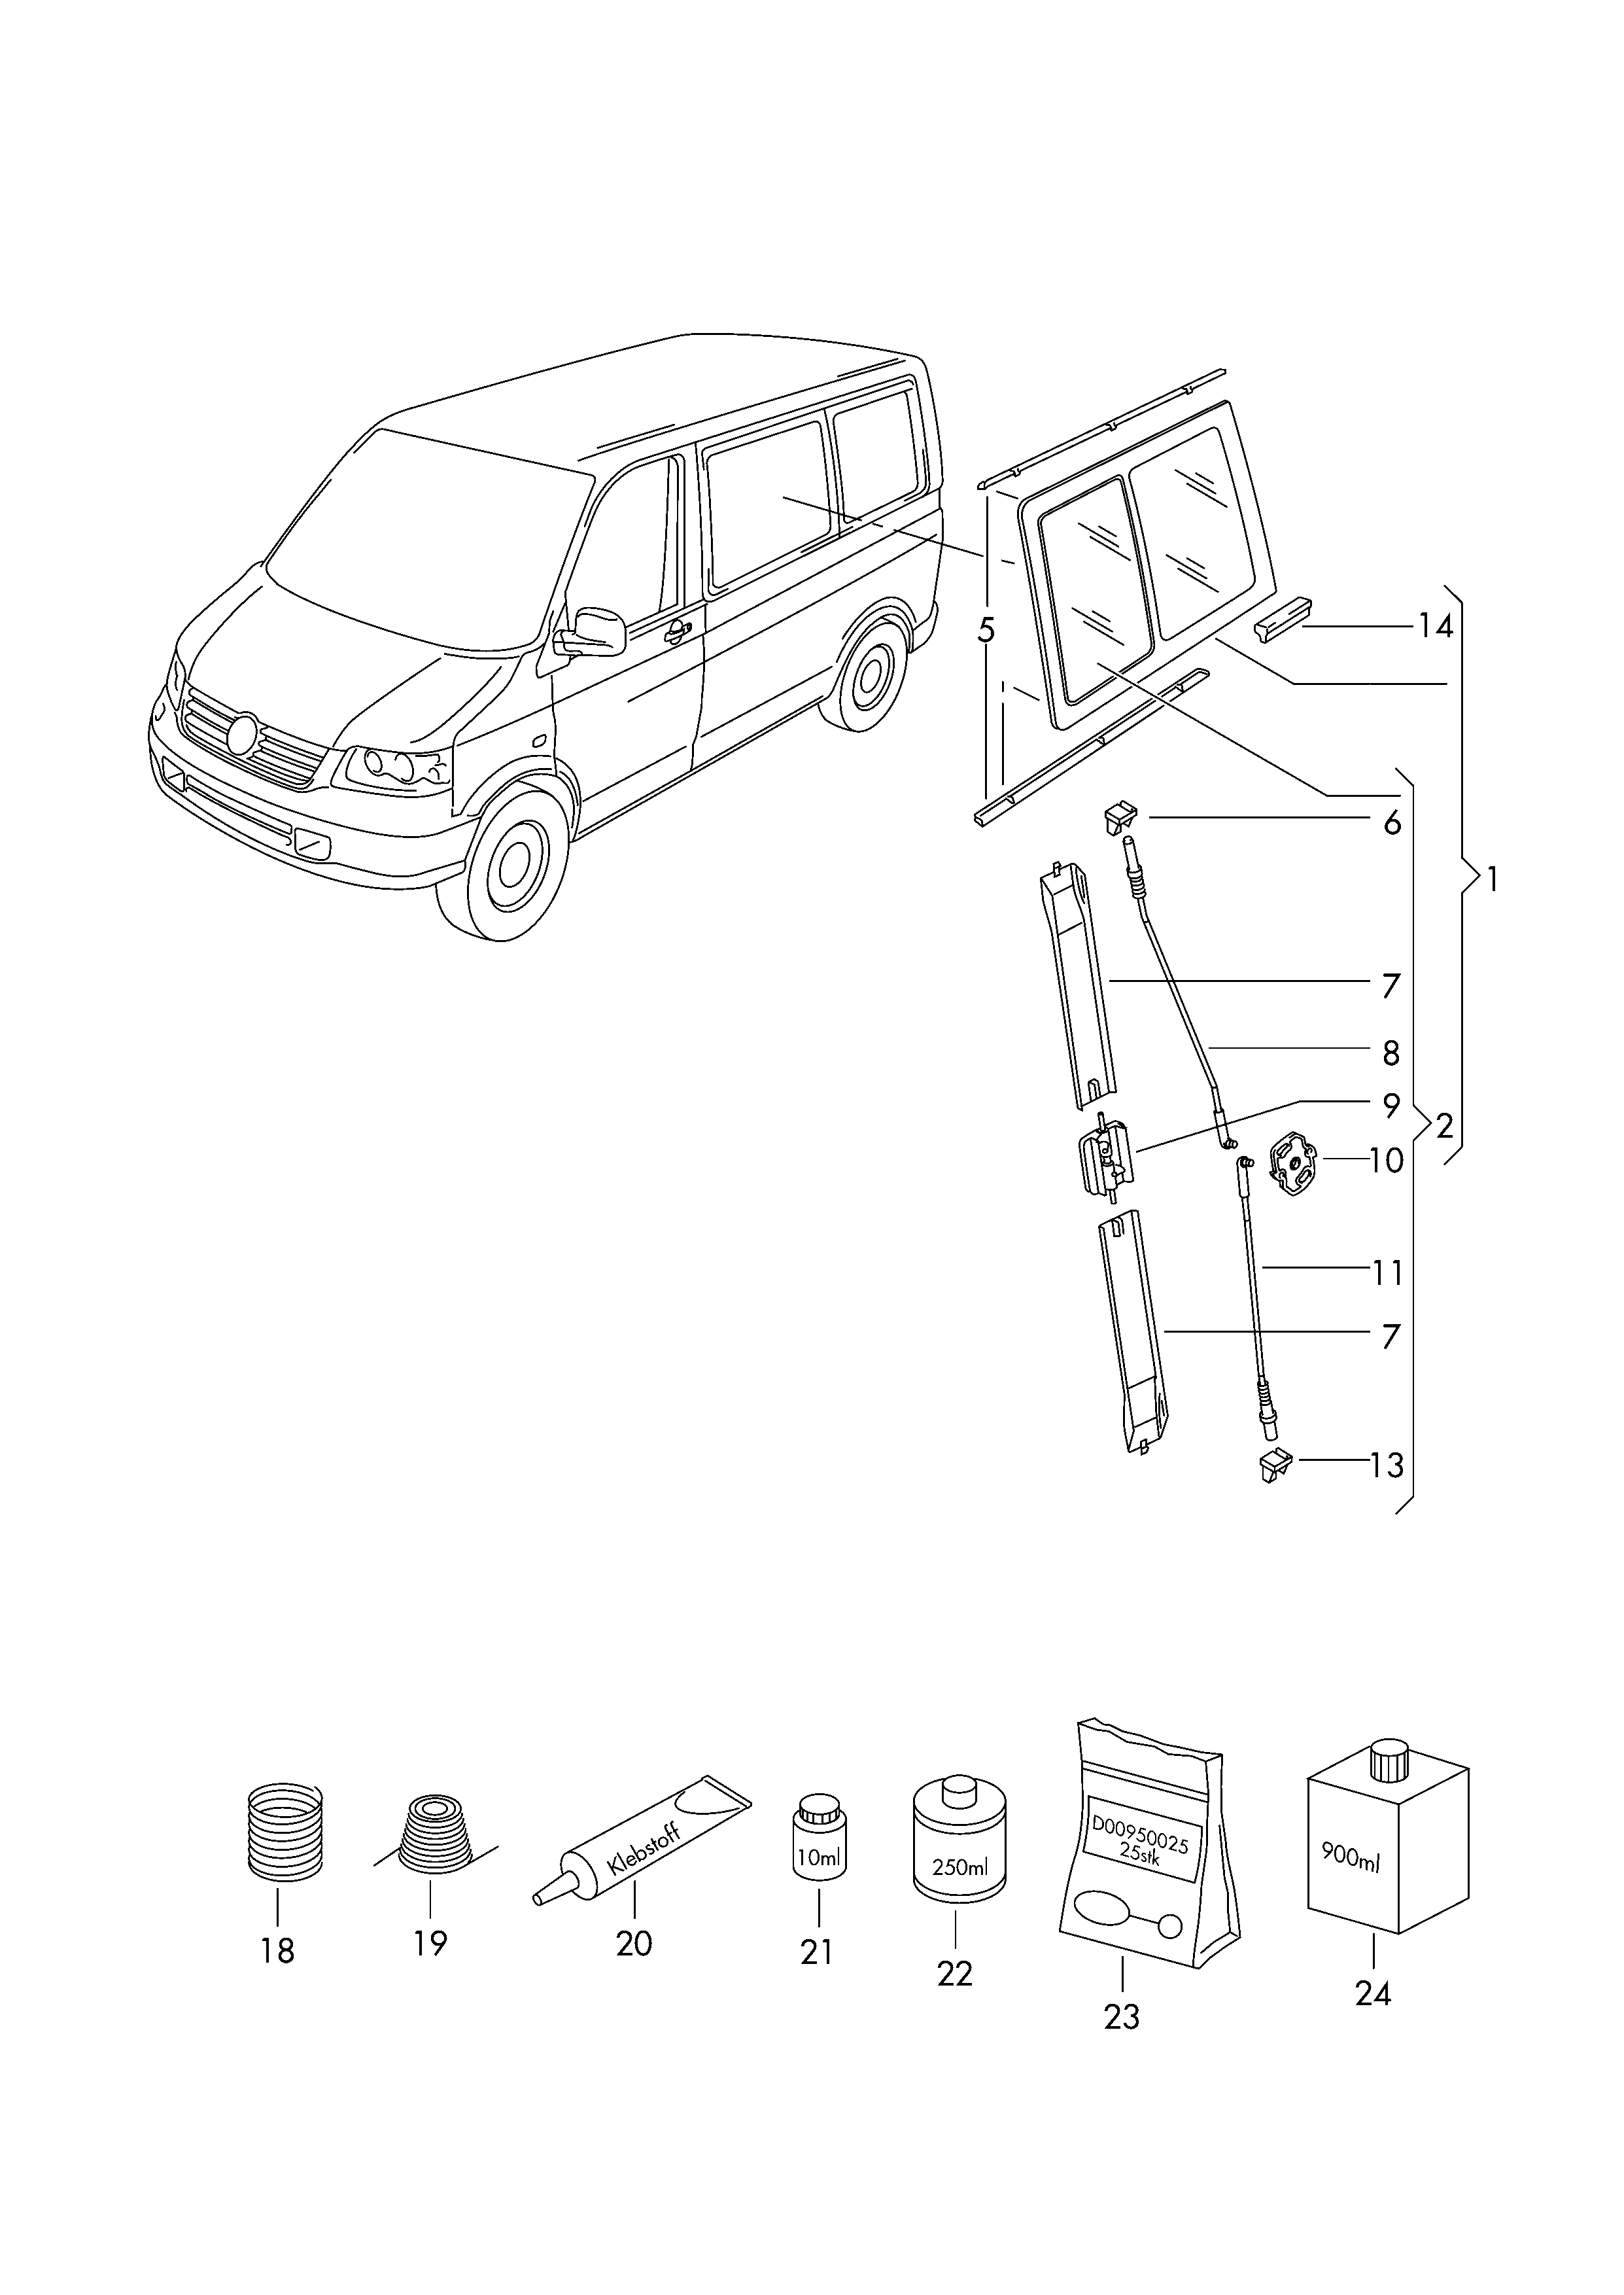 Individual items for sliding<br>window left - Transporter - tr